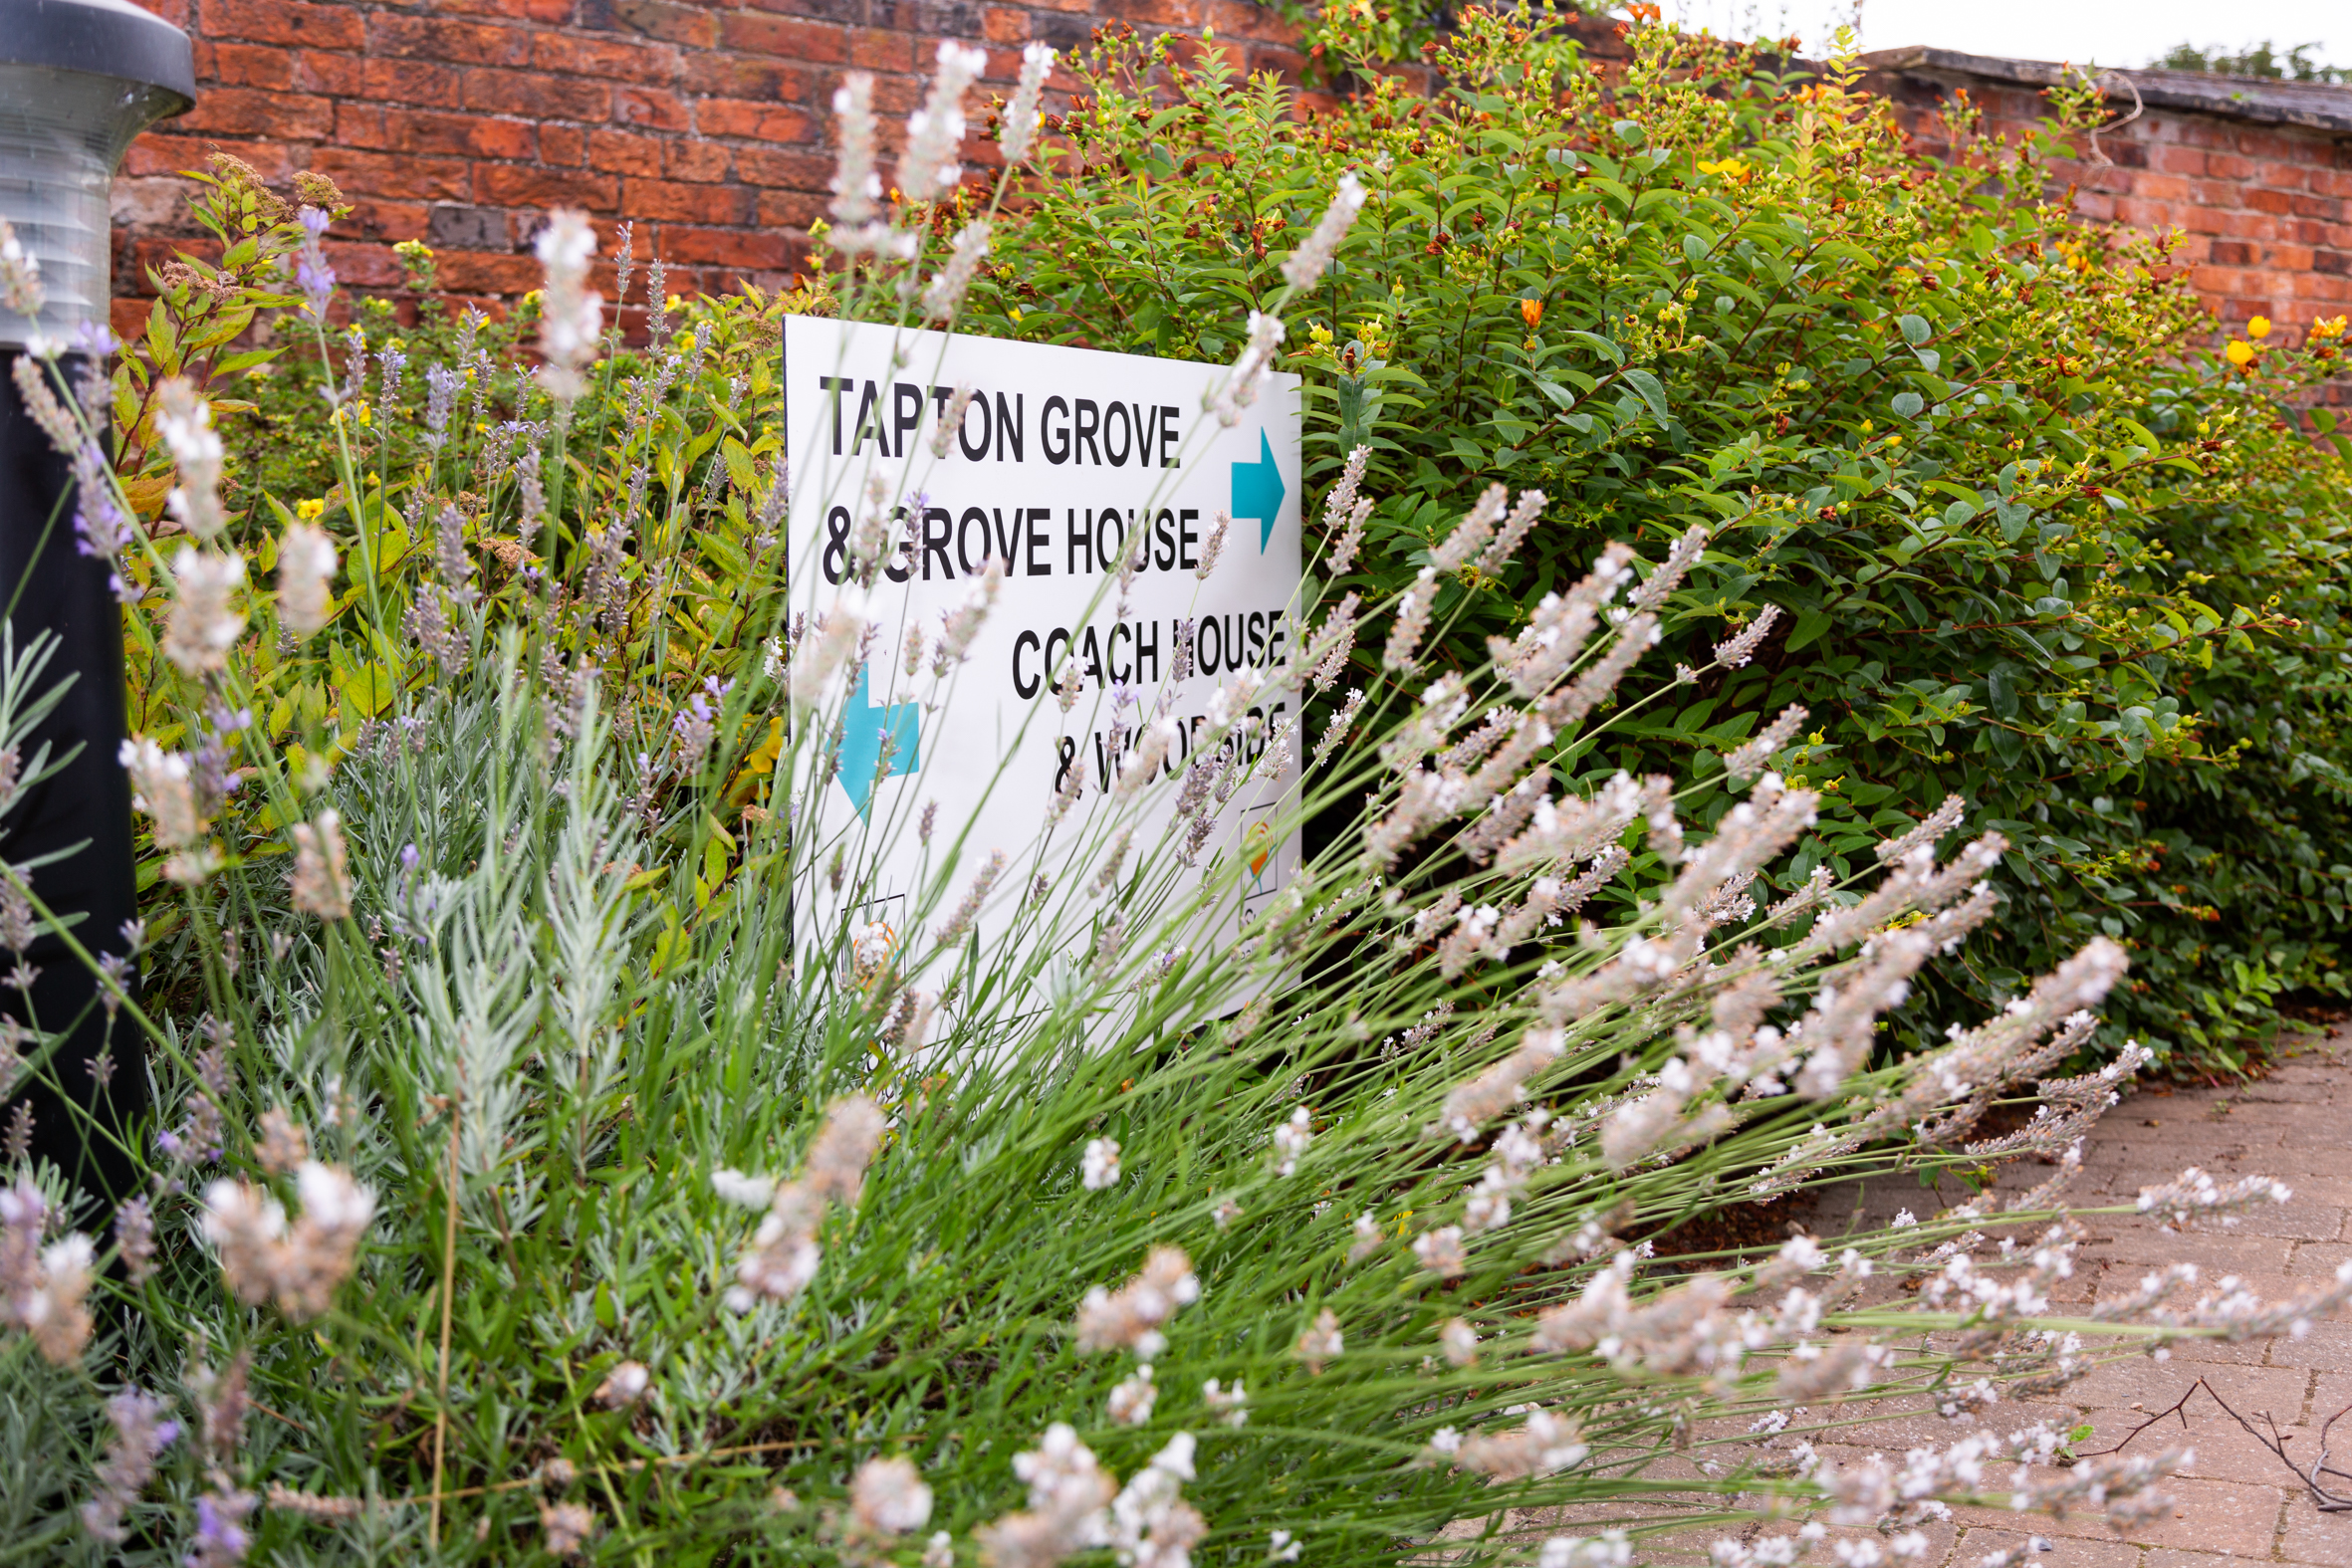 Tapton Grove sign, lavender